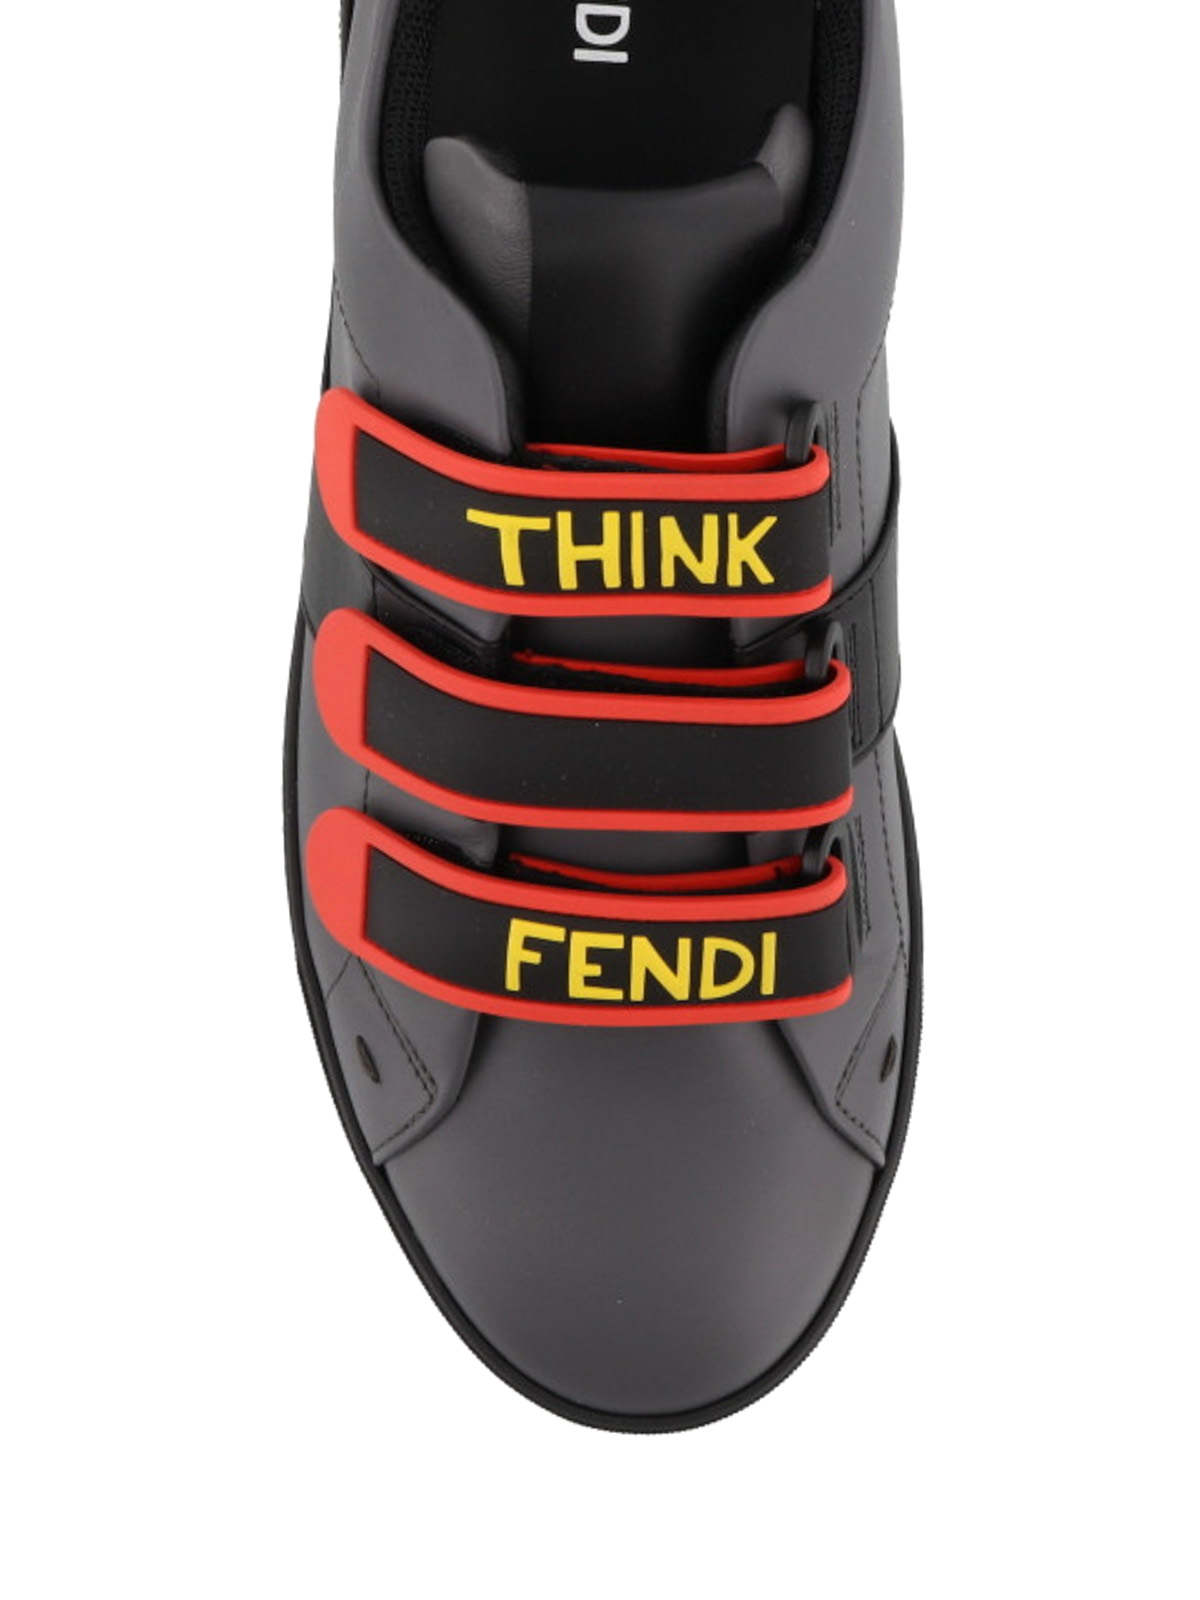 Think Fendi velcro straps sneakers 